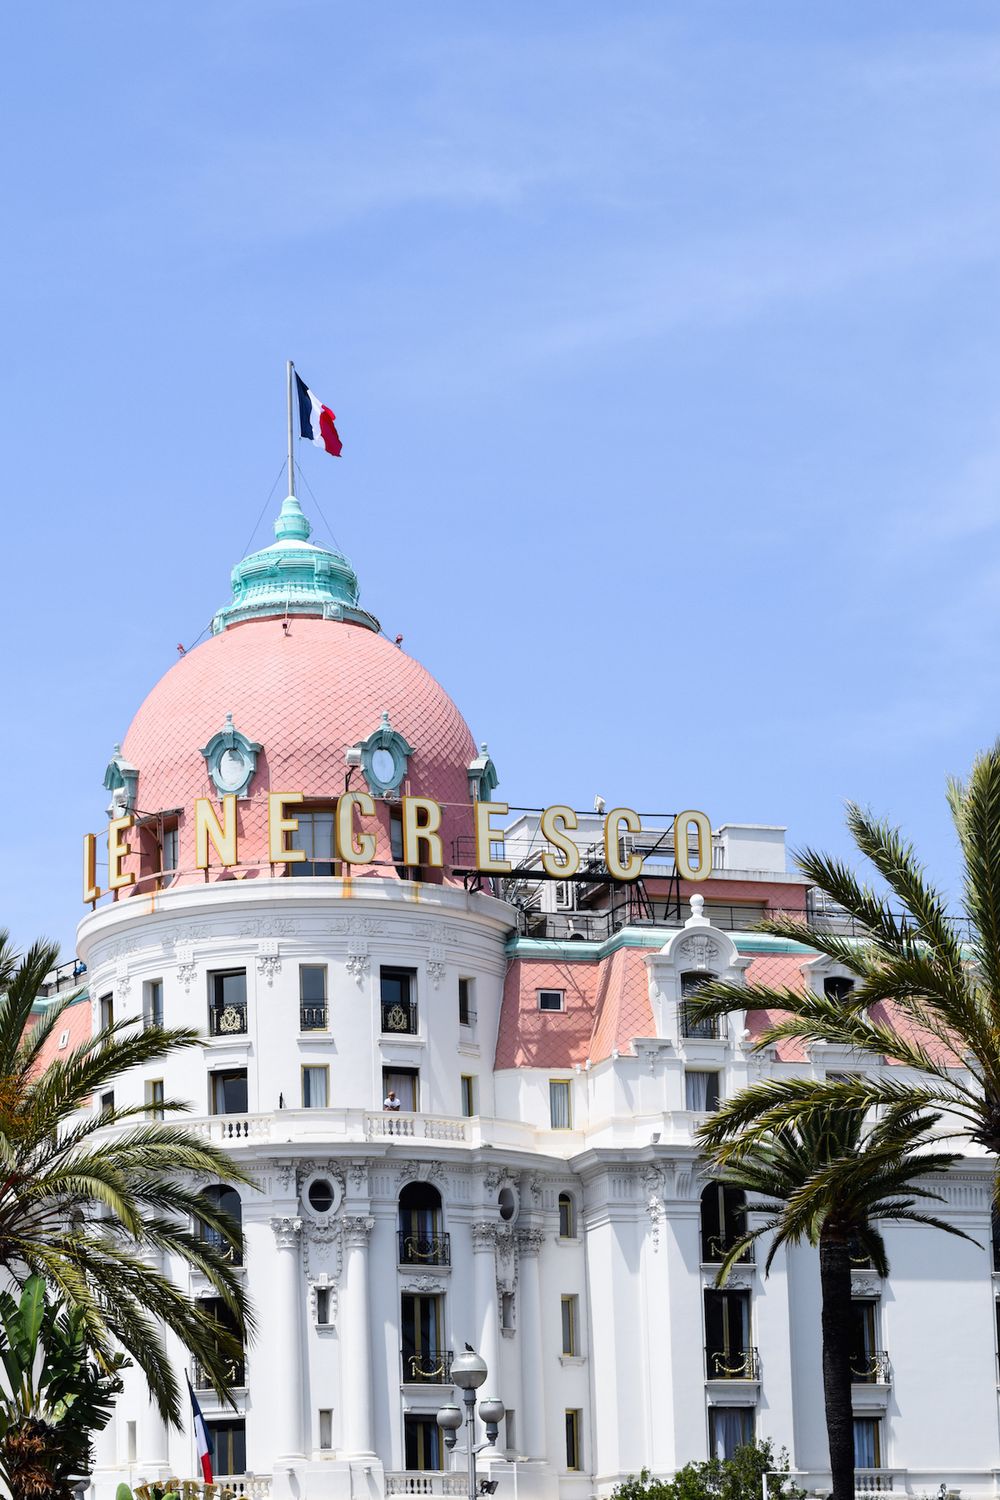 Le Negresco Hotel, Nice, France Travel Guide